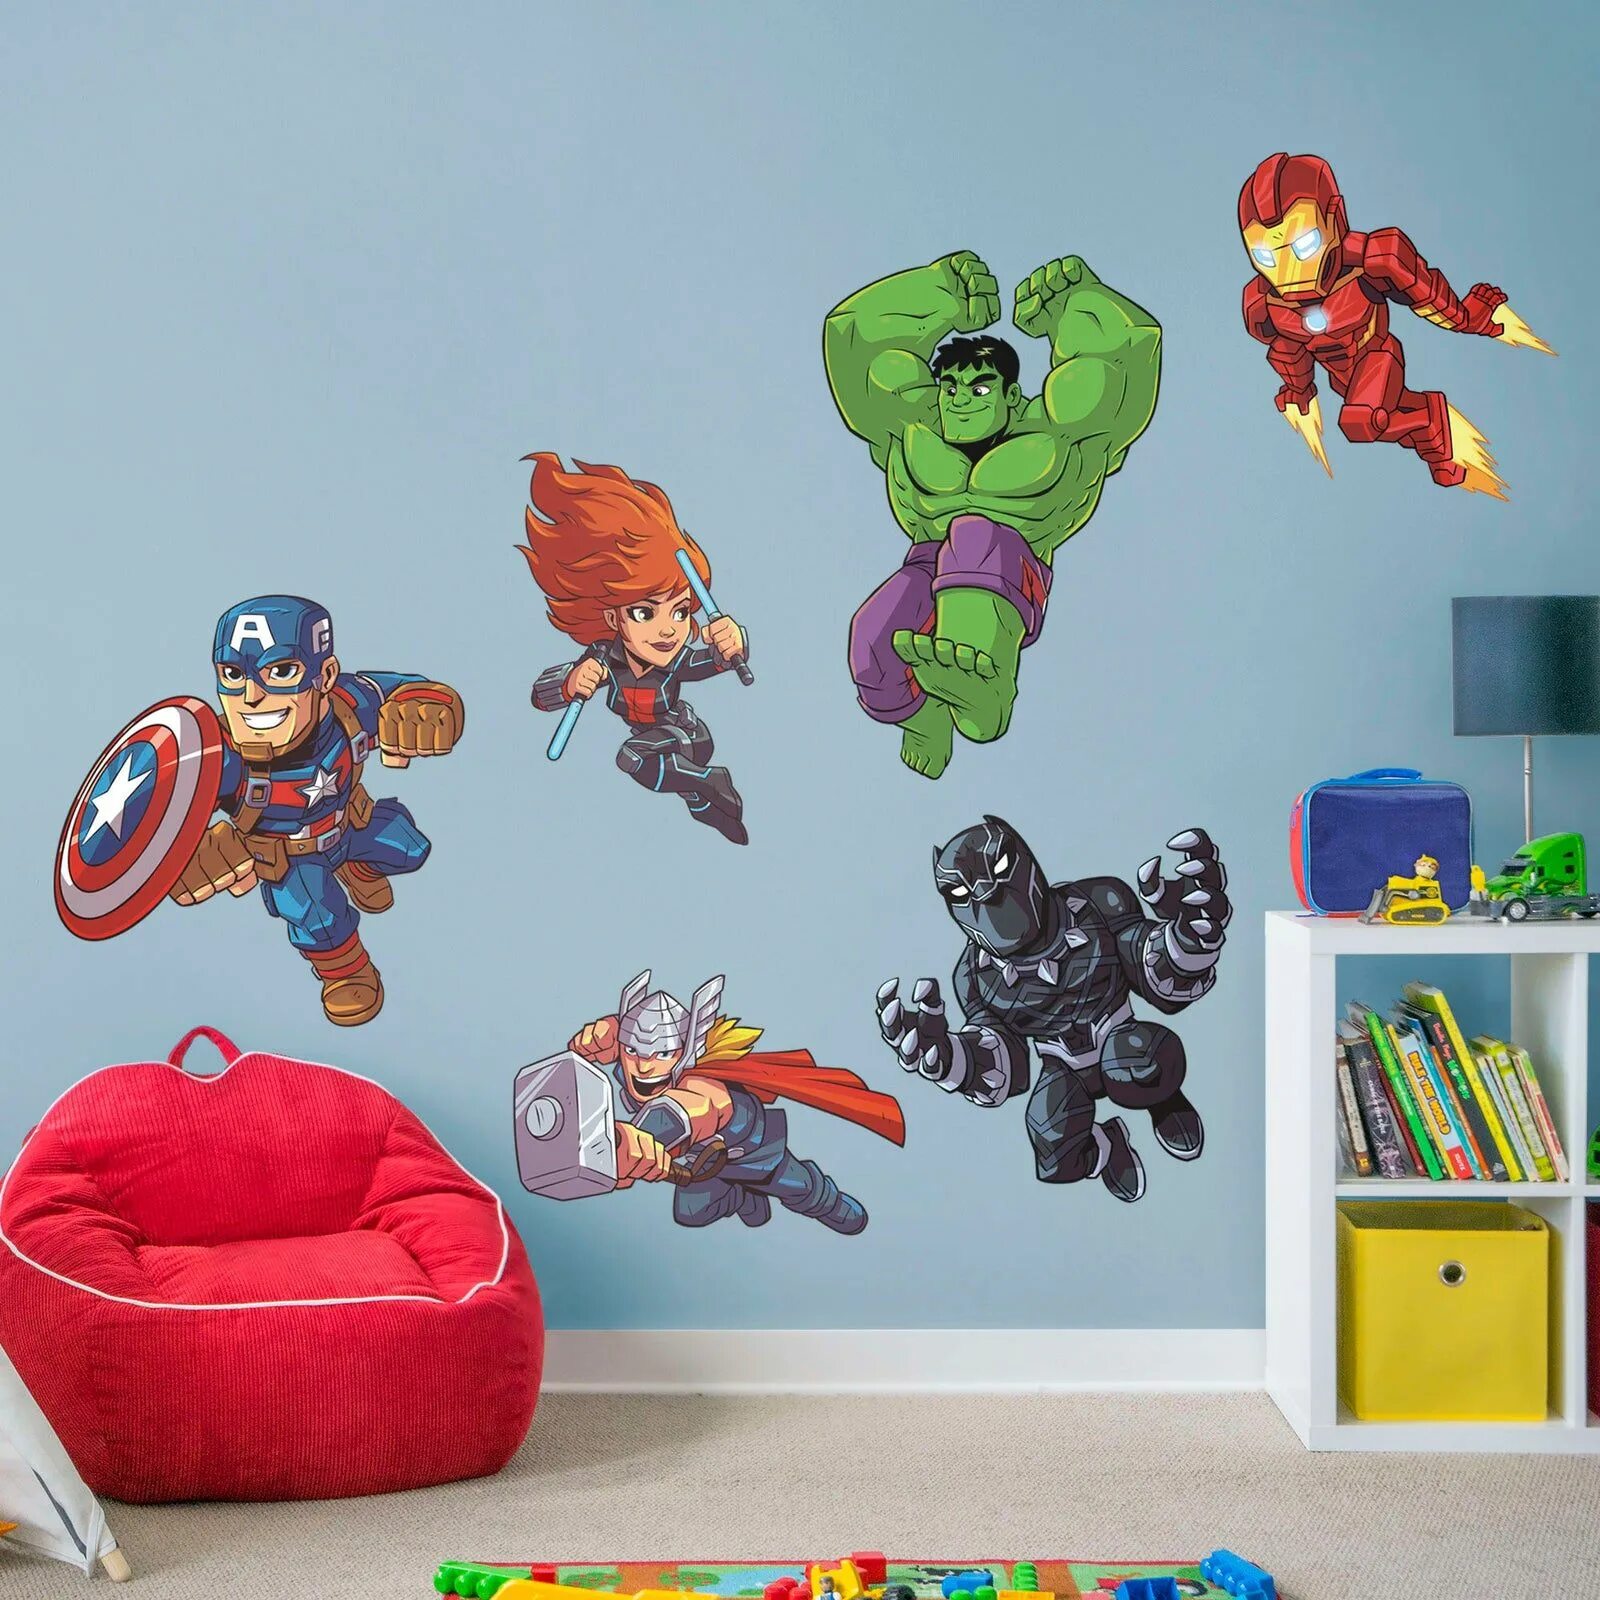 Детская комната в стиле Мстителей. Комната в стиле Мстителей. Детская комната с героями Марвел. Комната в стиле Марвел для мальчика.